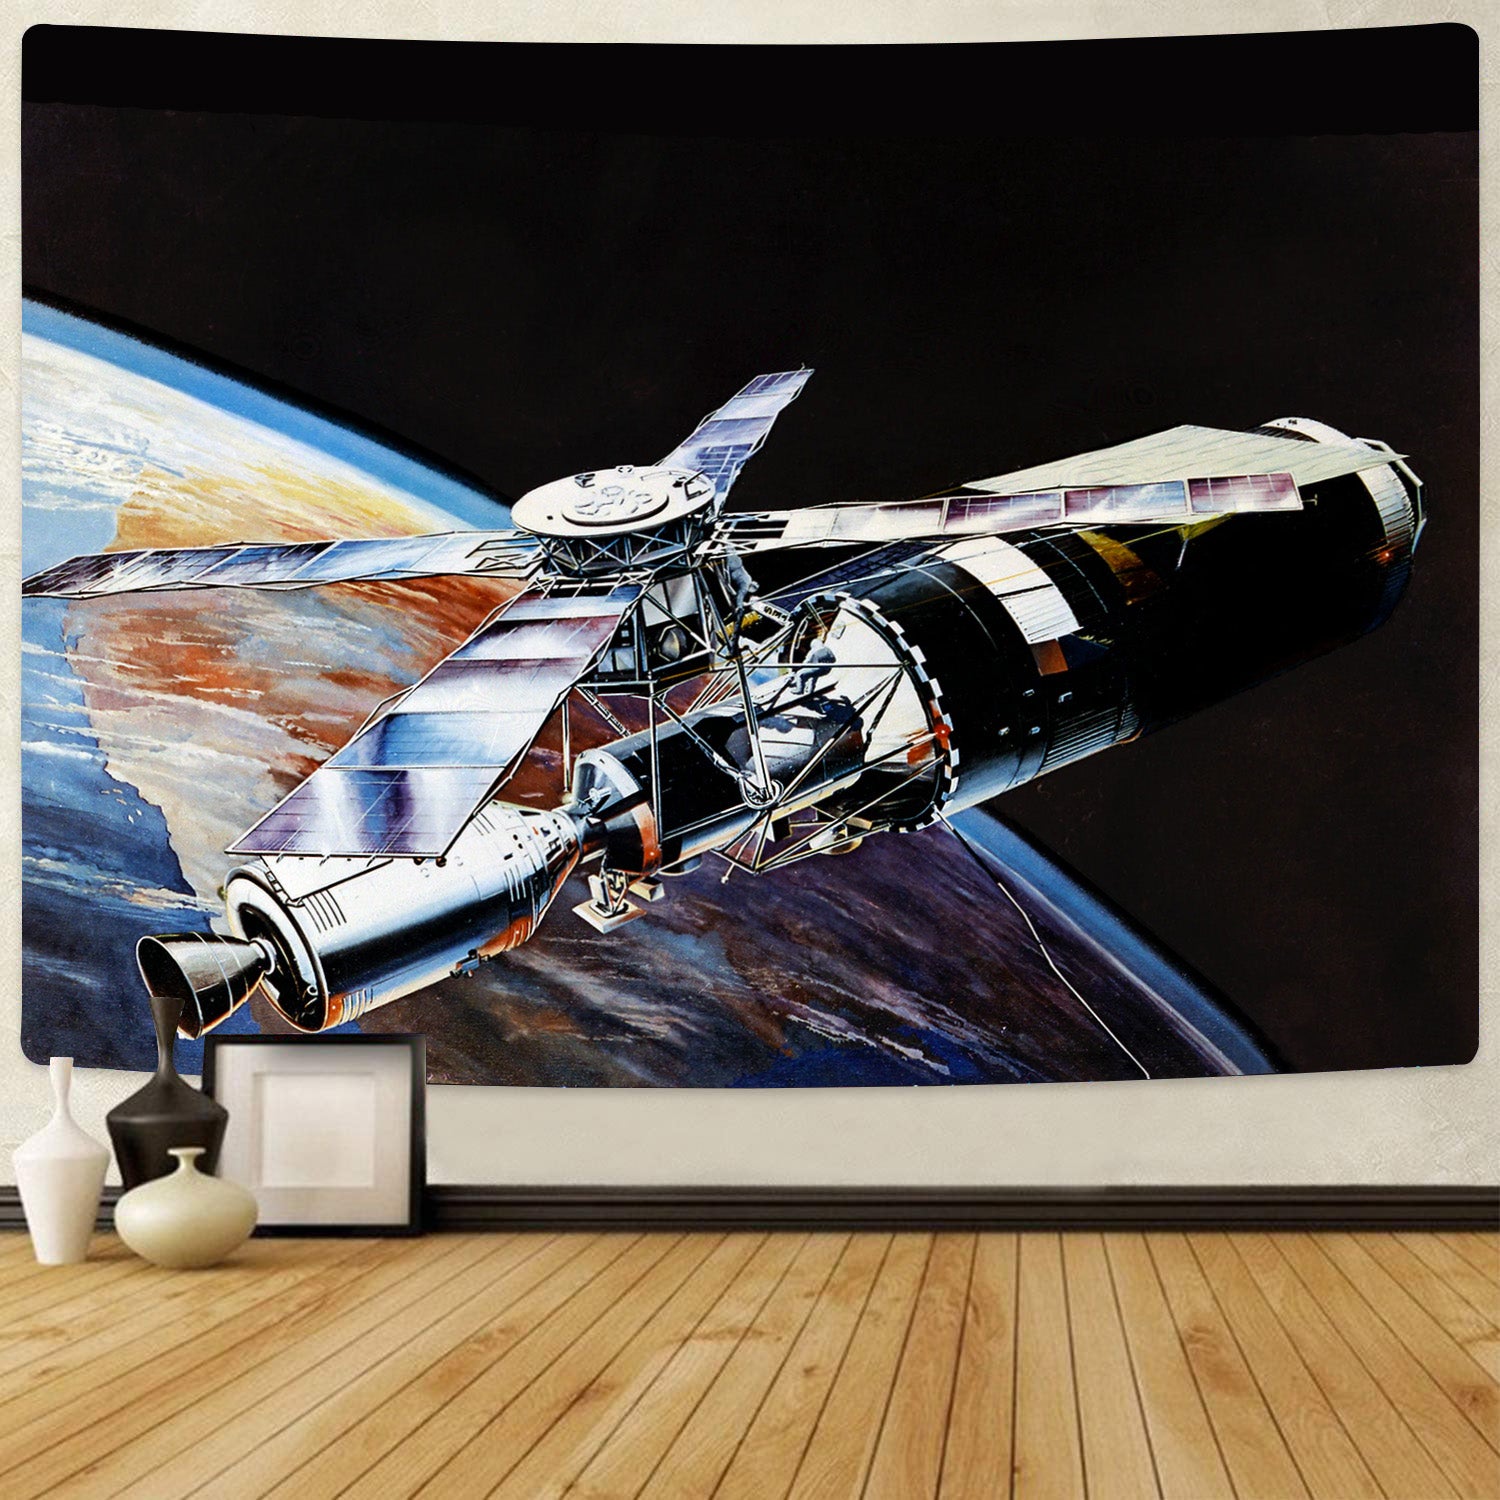 Skylab Space Station Tapestry 06287